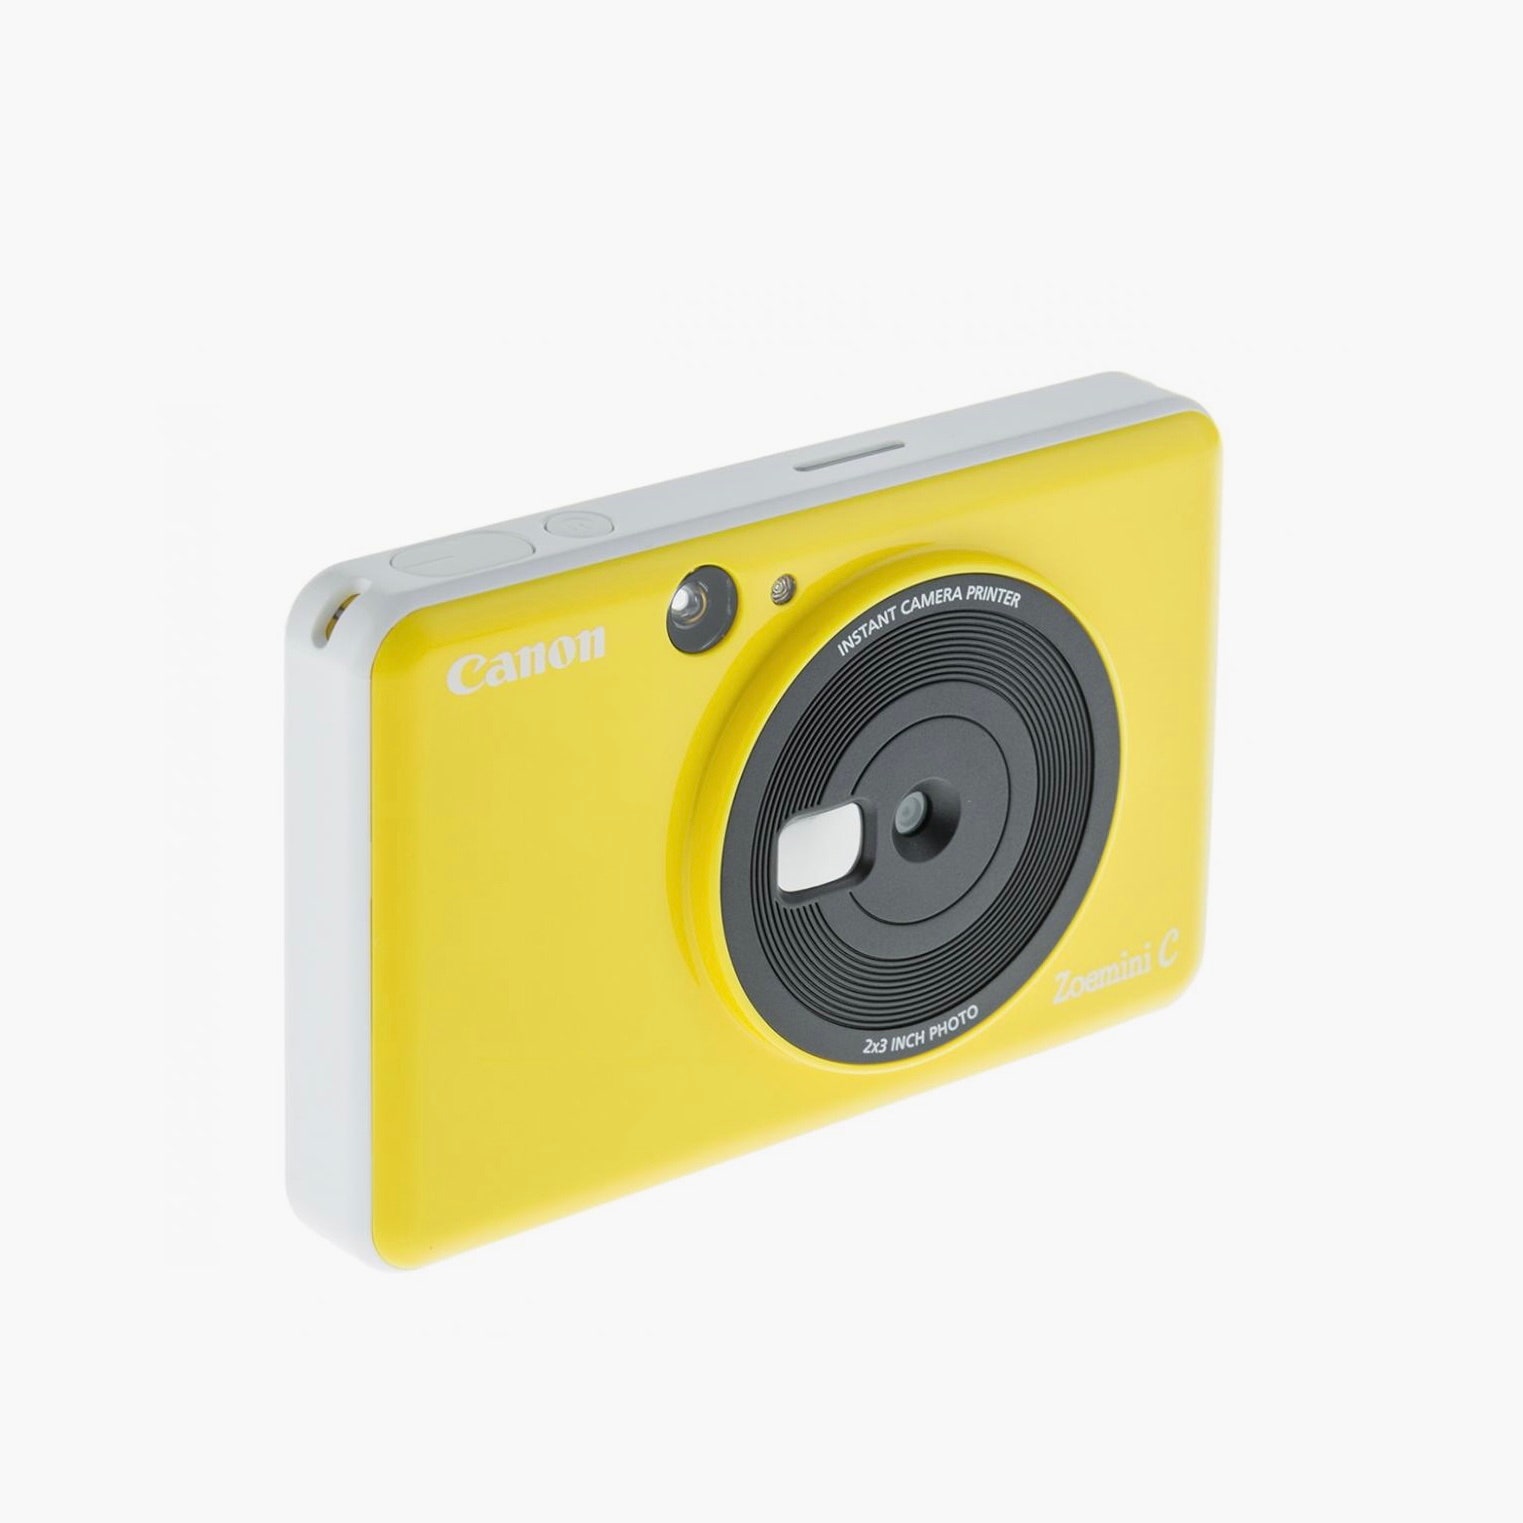 Canon Zoemini C 6990 рублей market.yandex.ru